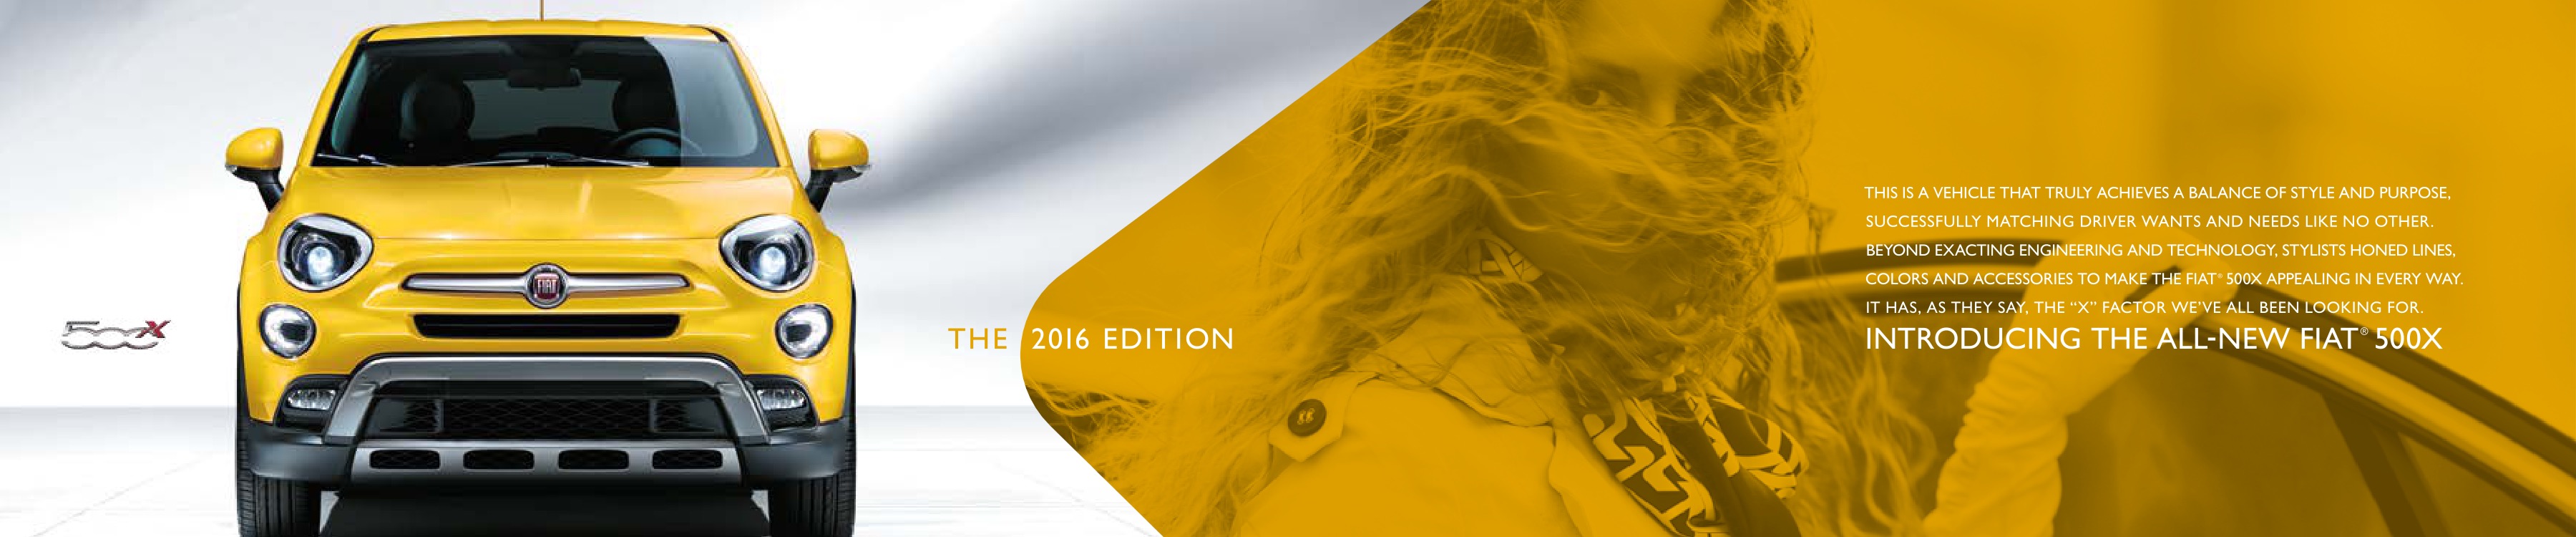 2016 Fiat 500X Brochure Page 6